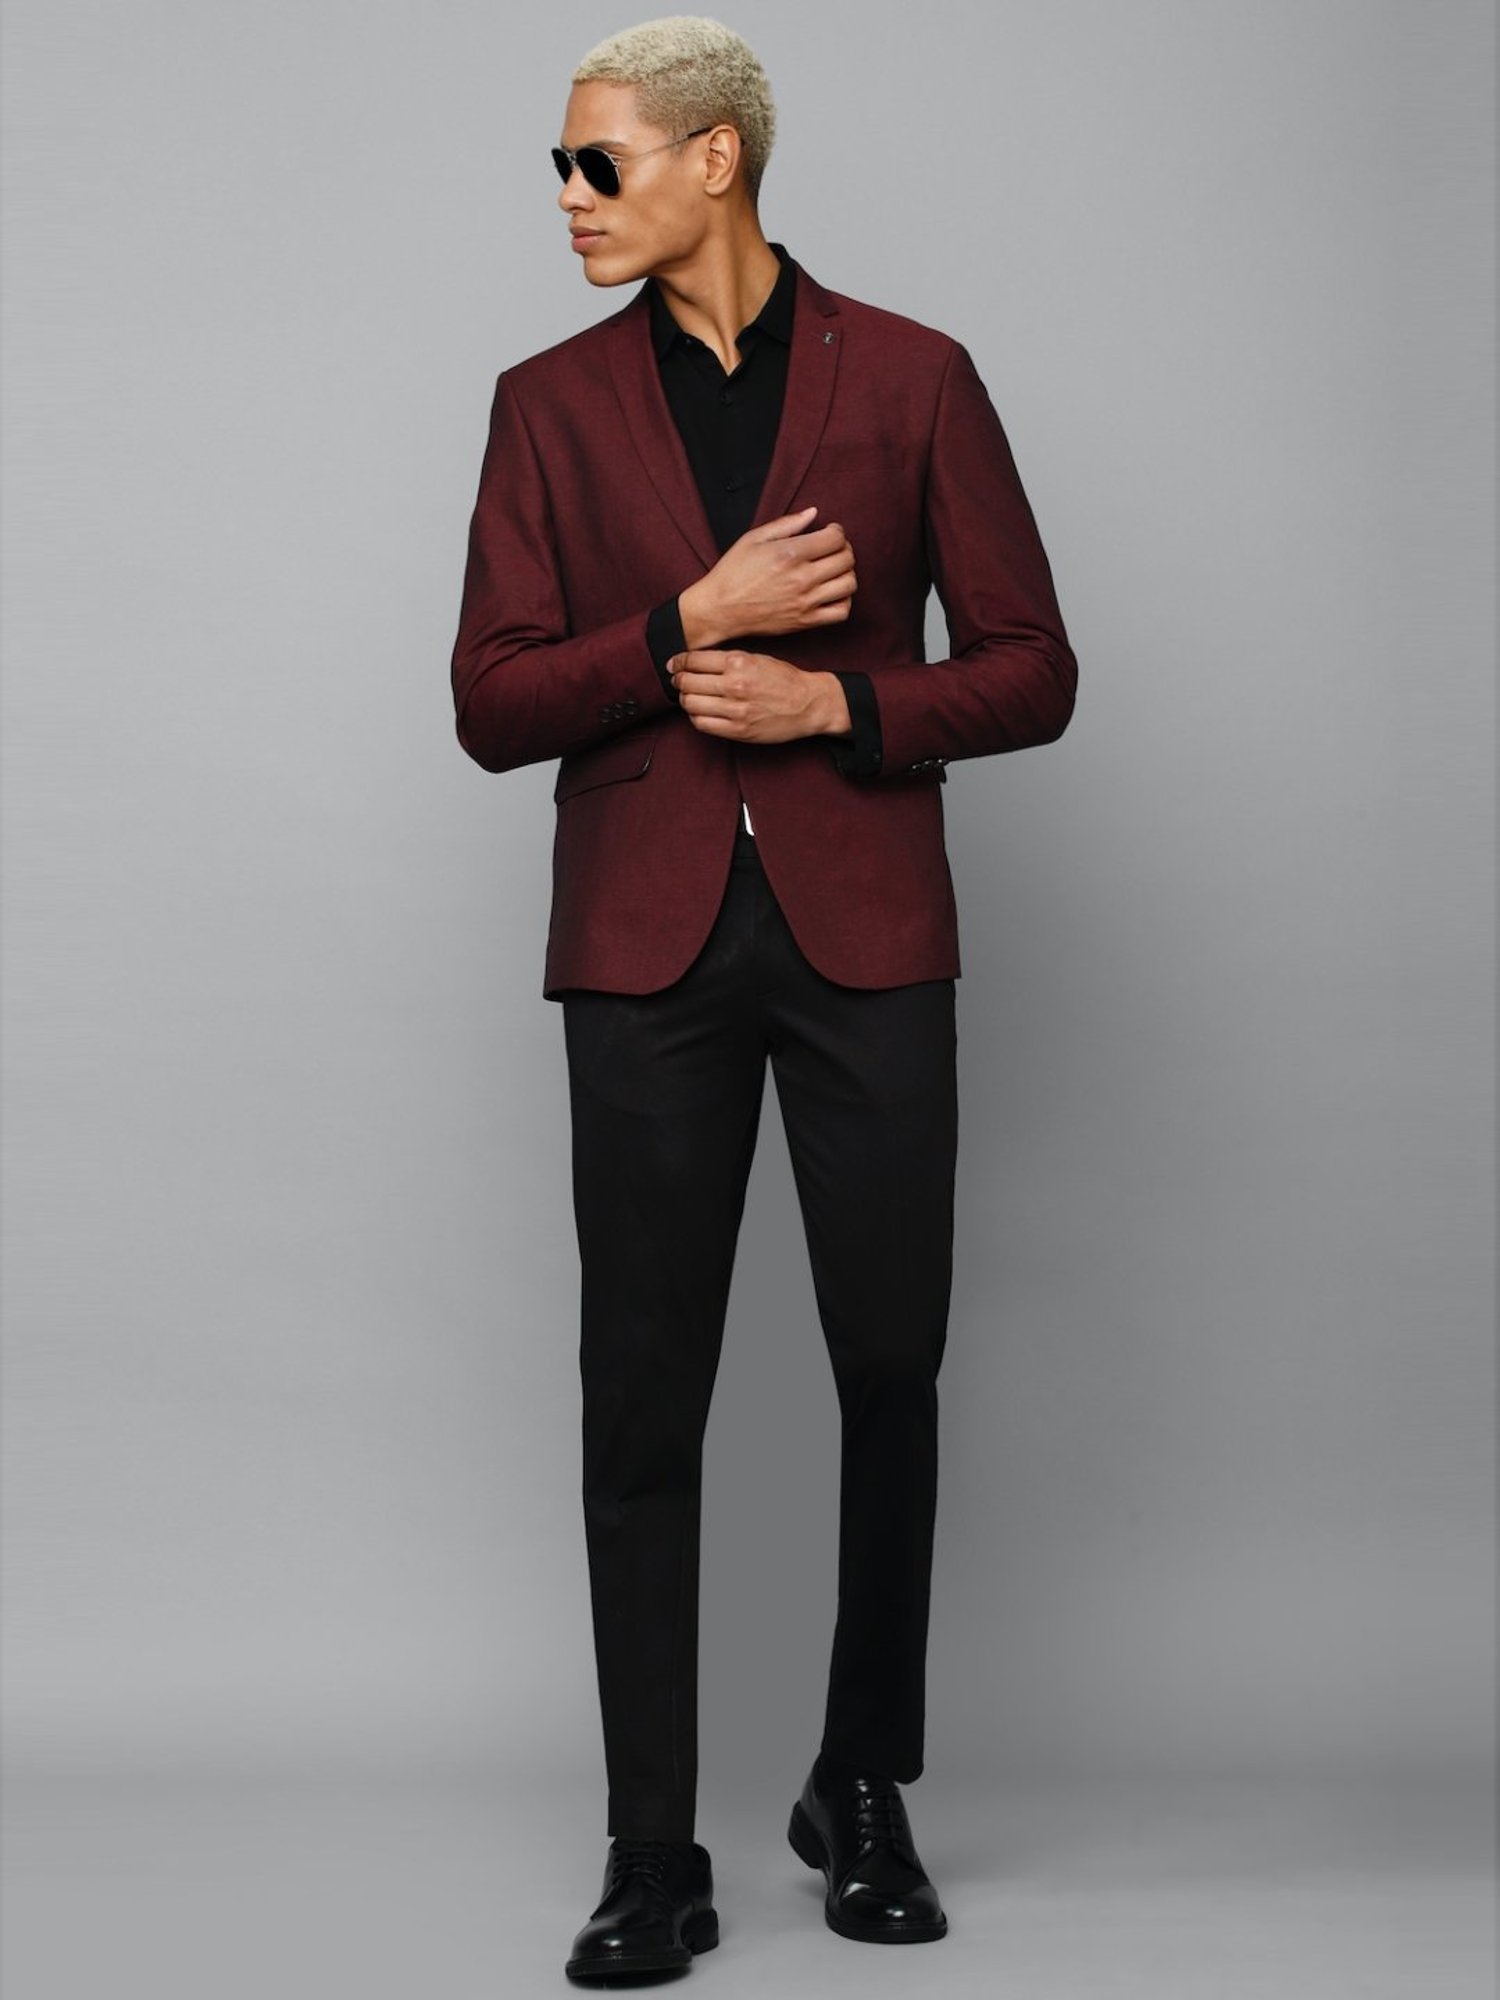 Men's Burgundy Blazer, Black Turtleneck, Charcoal Dress Pants, Burgundy  Leather Oxford Shoes | Lookastic